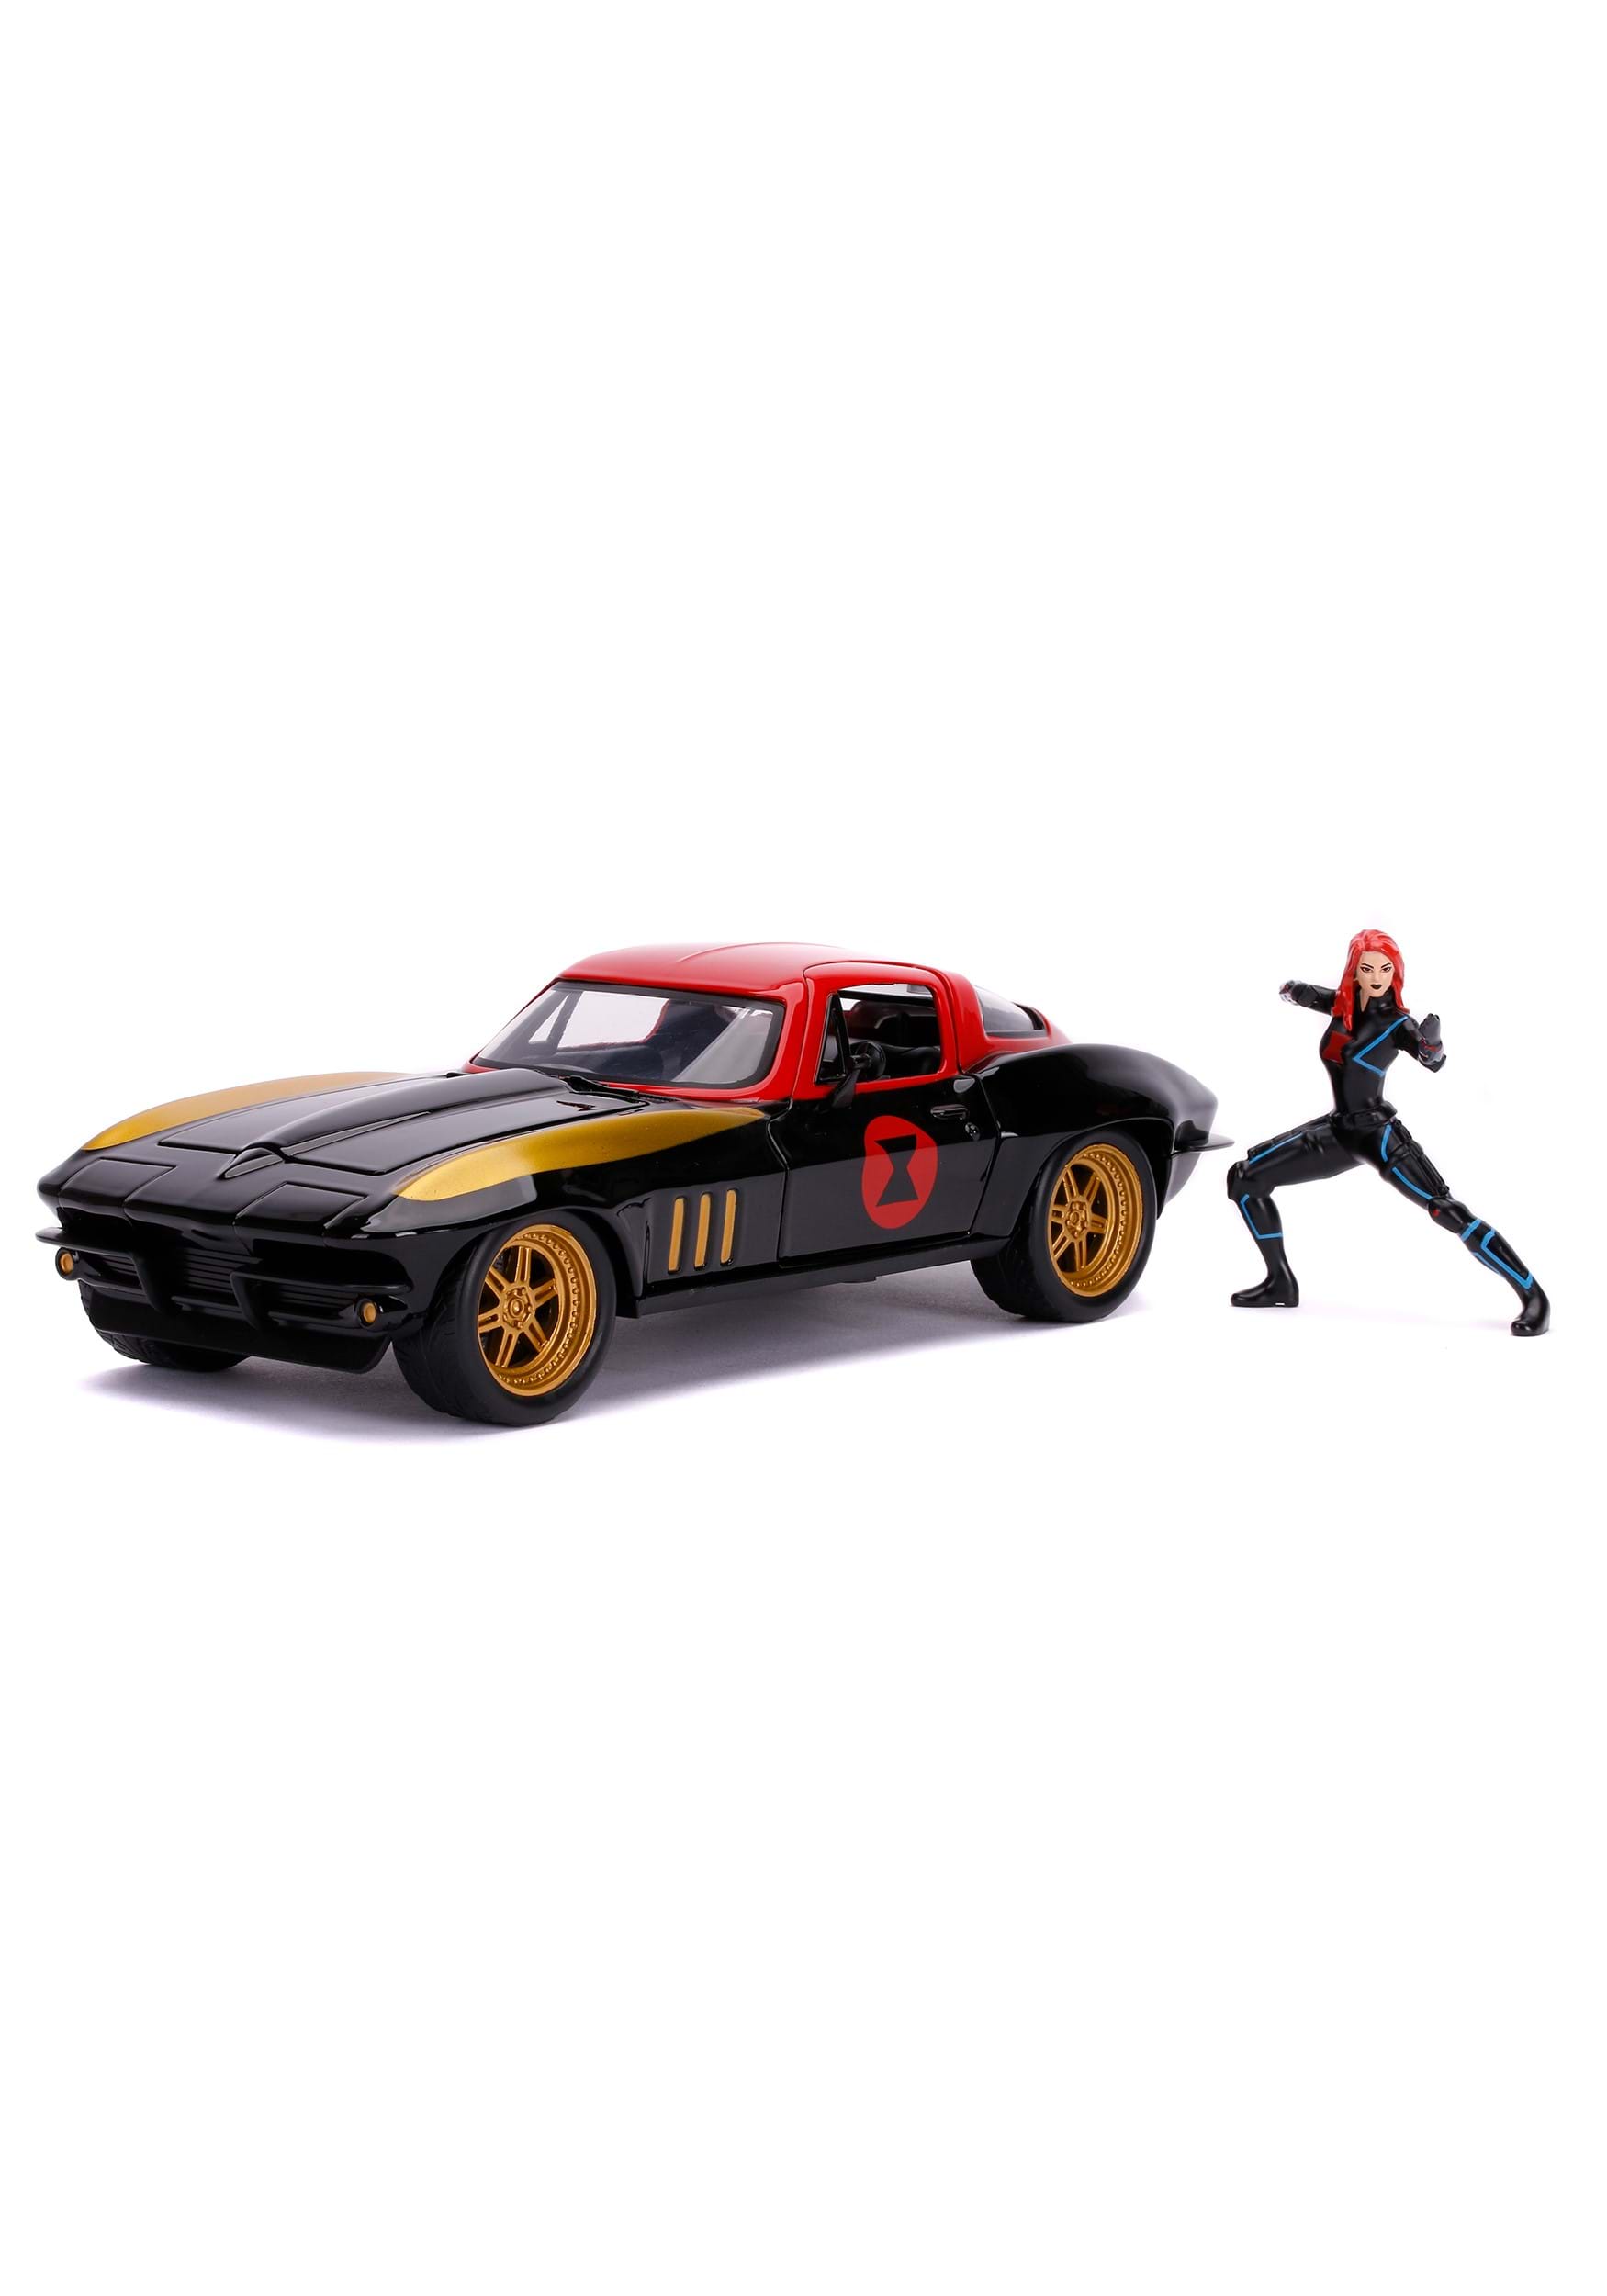 1:24 Scale 66 Chevy Corvette w/ Marvel Black Widow Figure